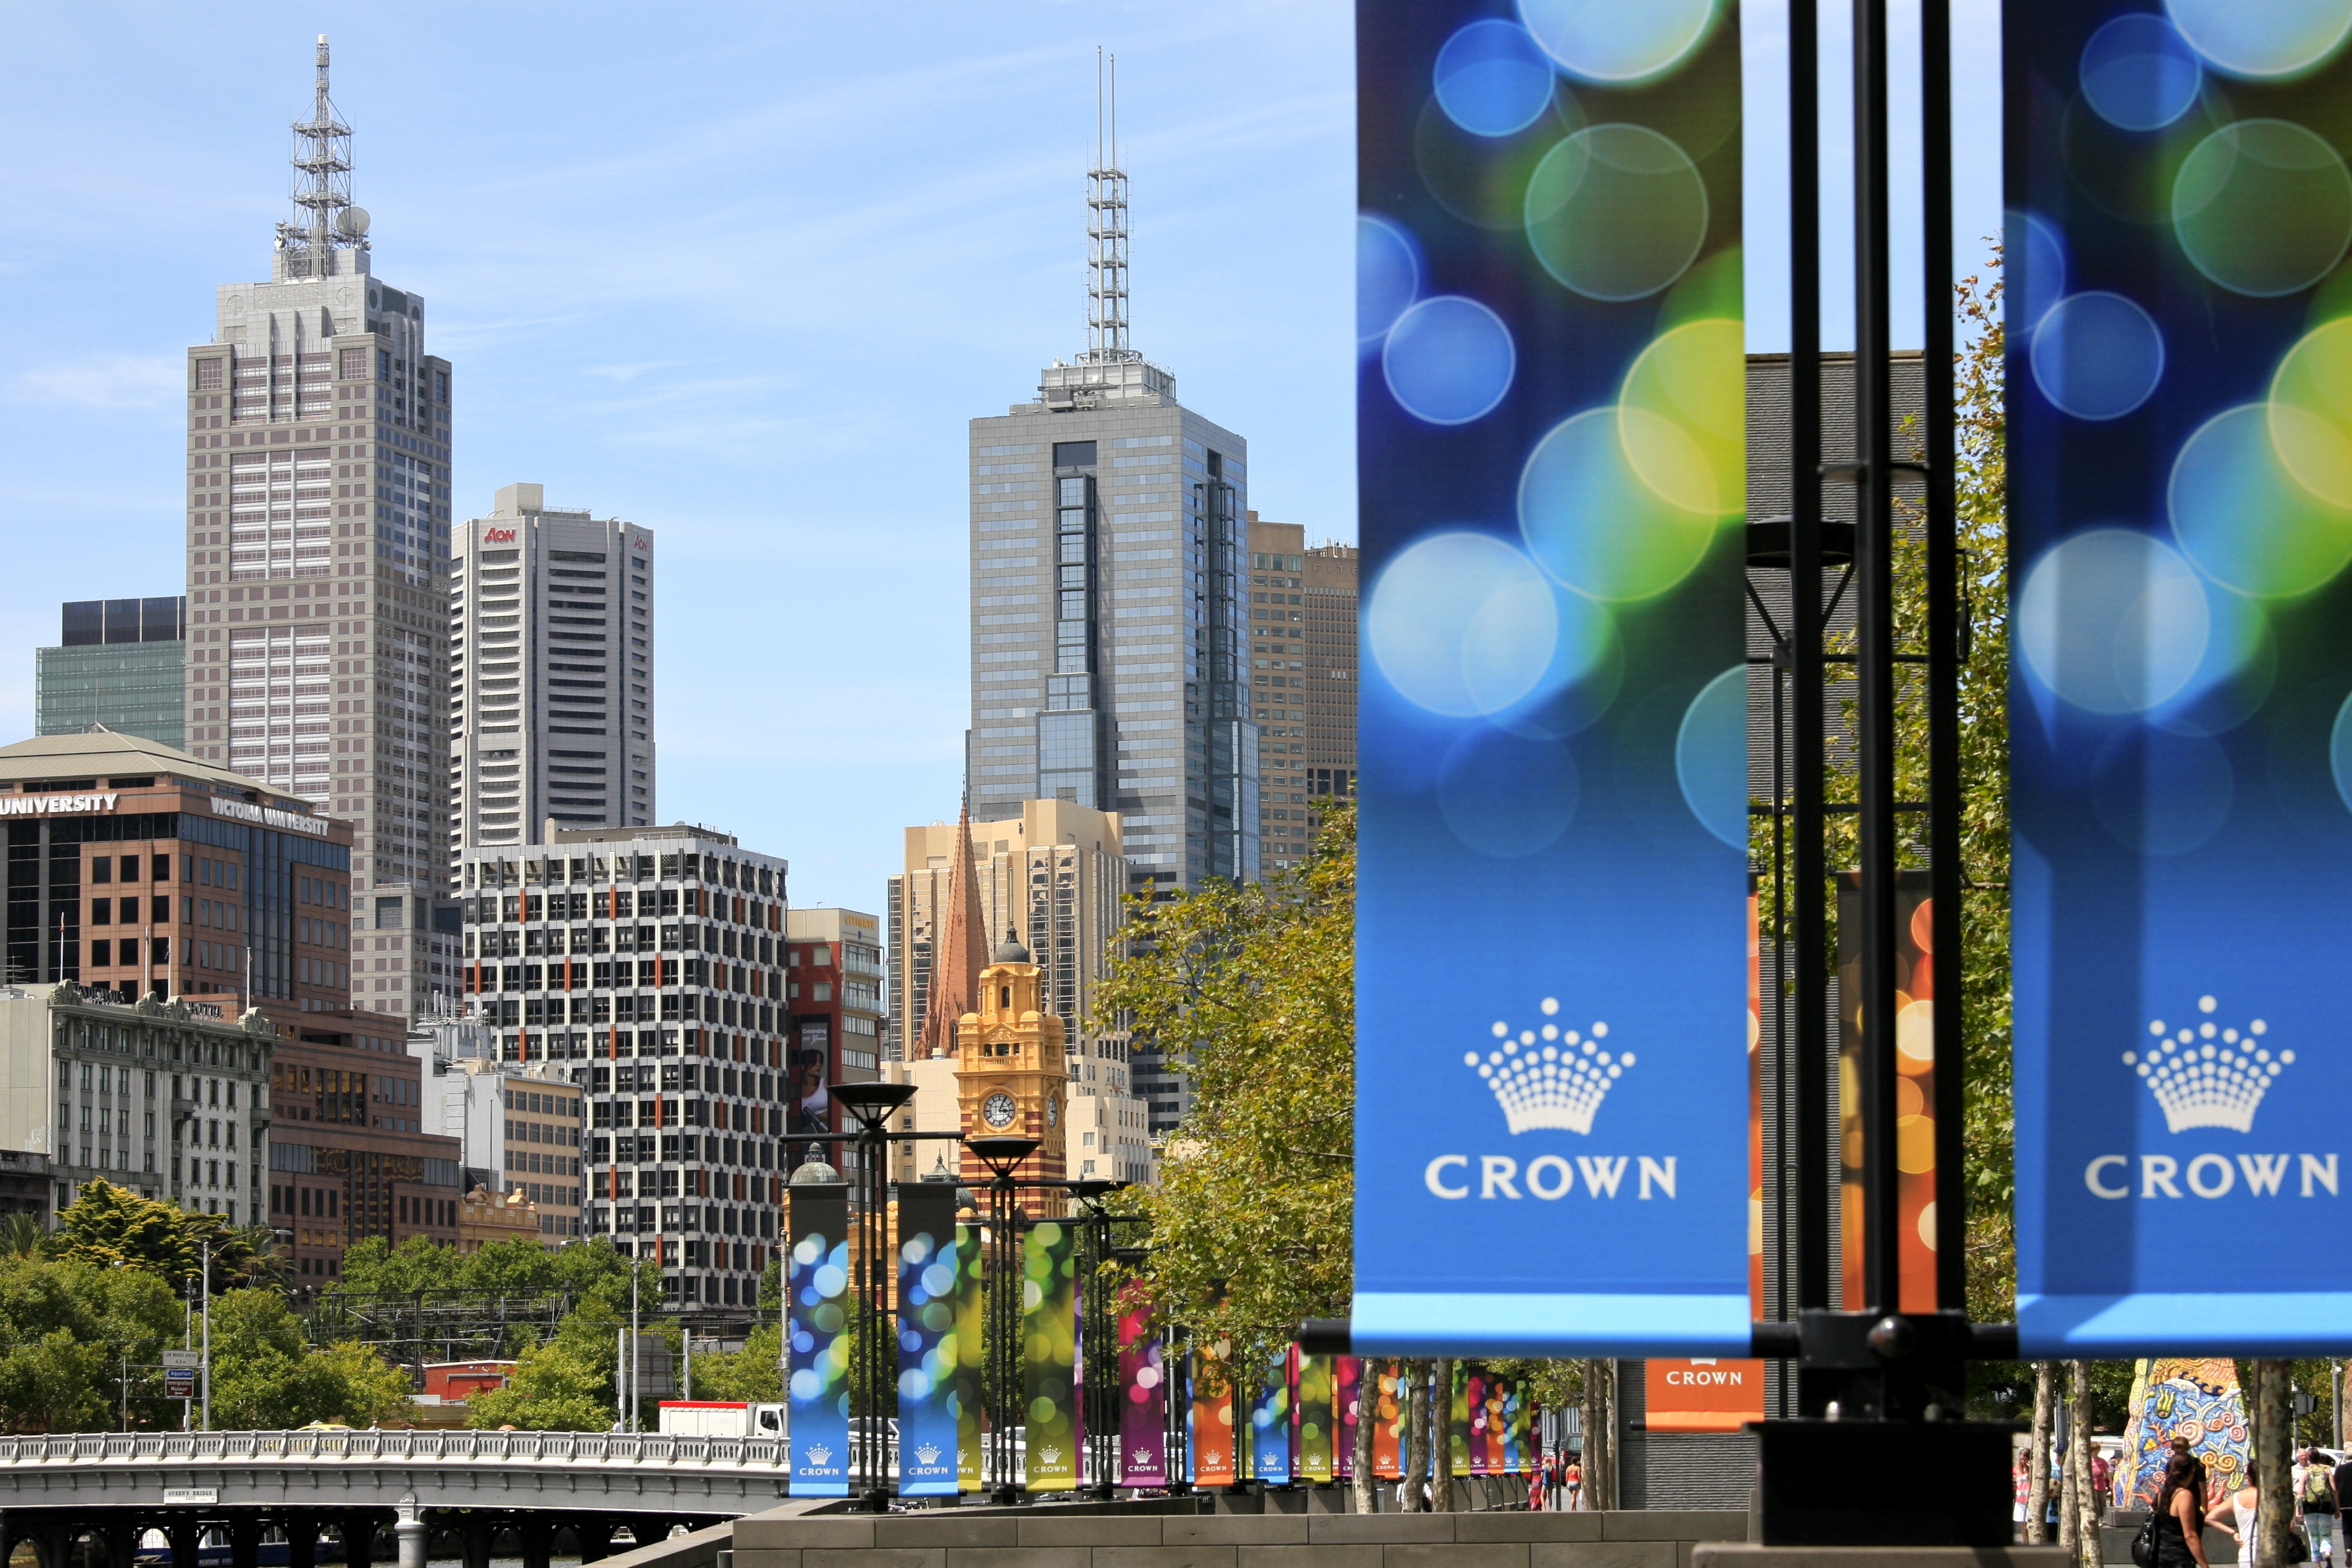 Crown Casino Banners in Sydney, Australia